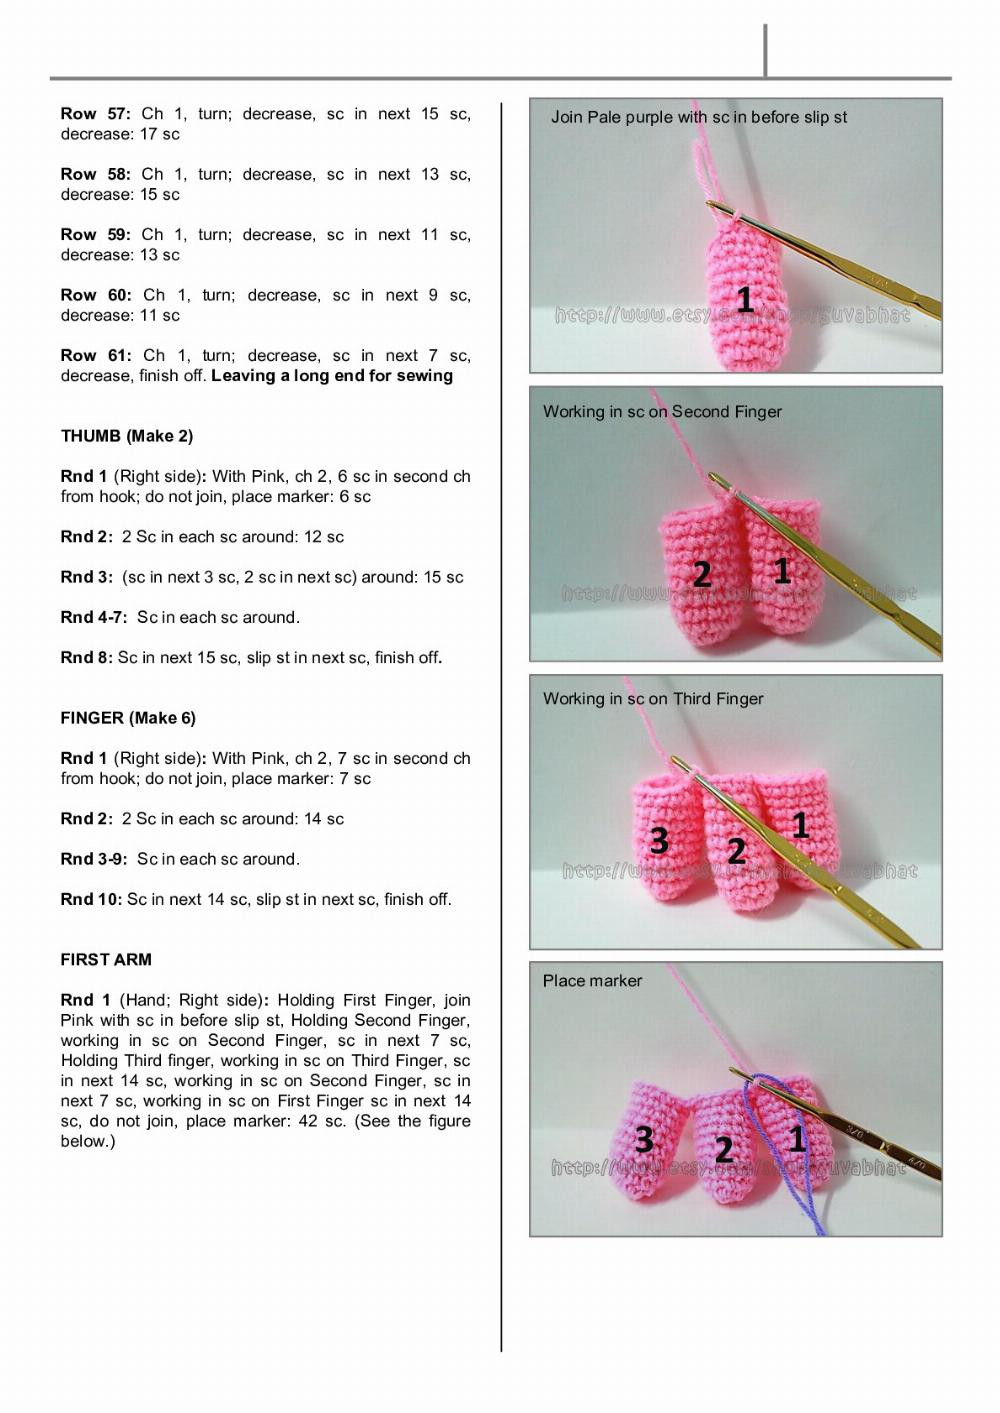 pink panther crochet pattern